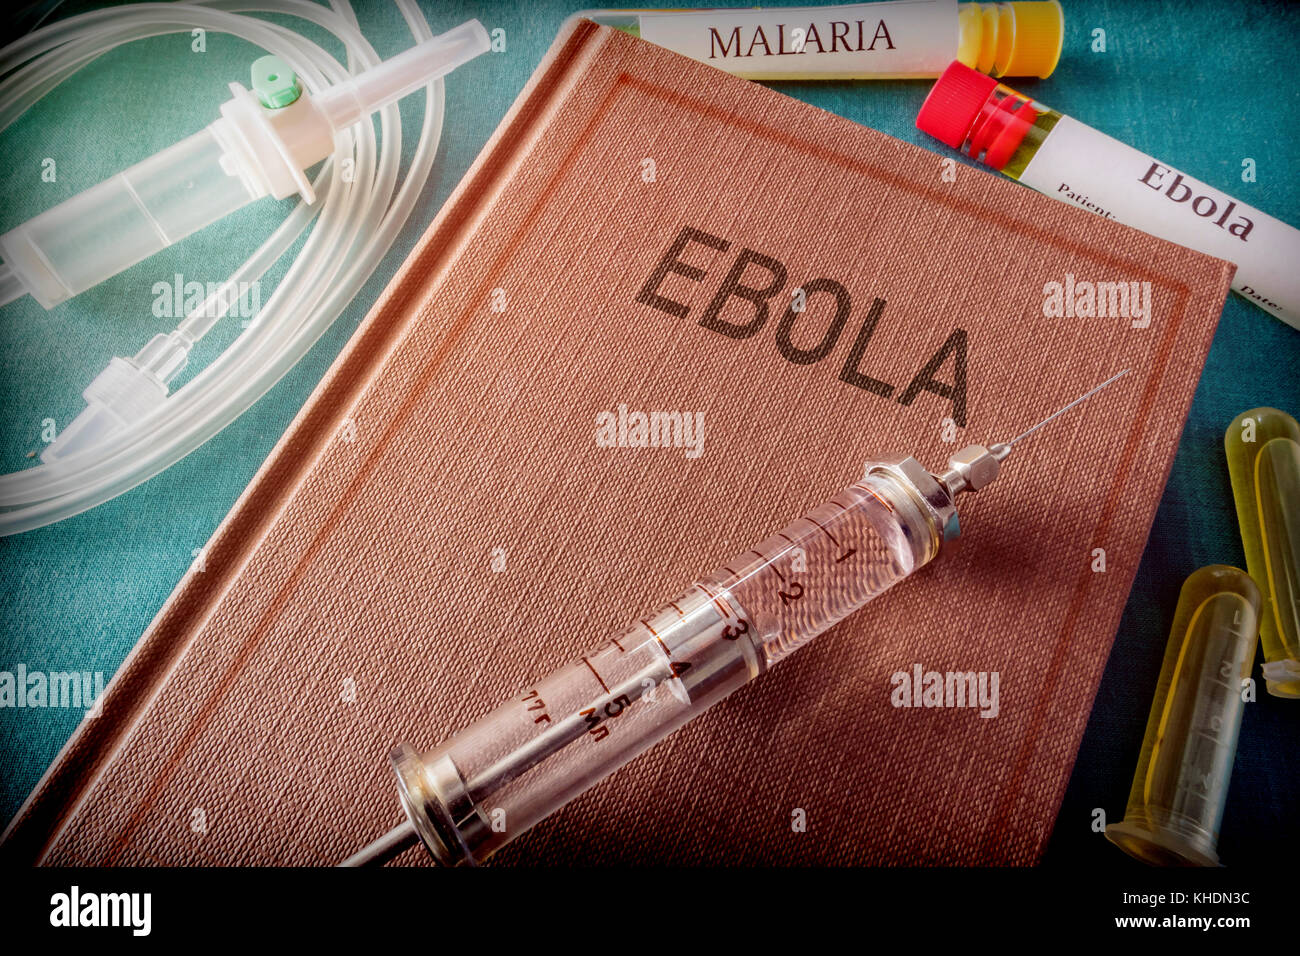 Vintage Syringe On A Book Of Ebola, Medical Concept Stock Photo